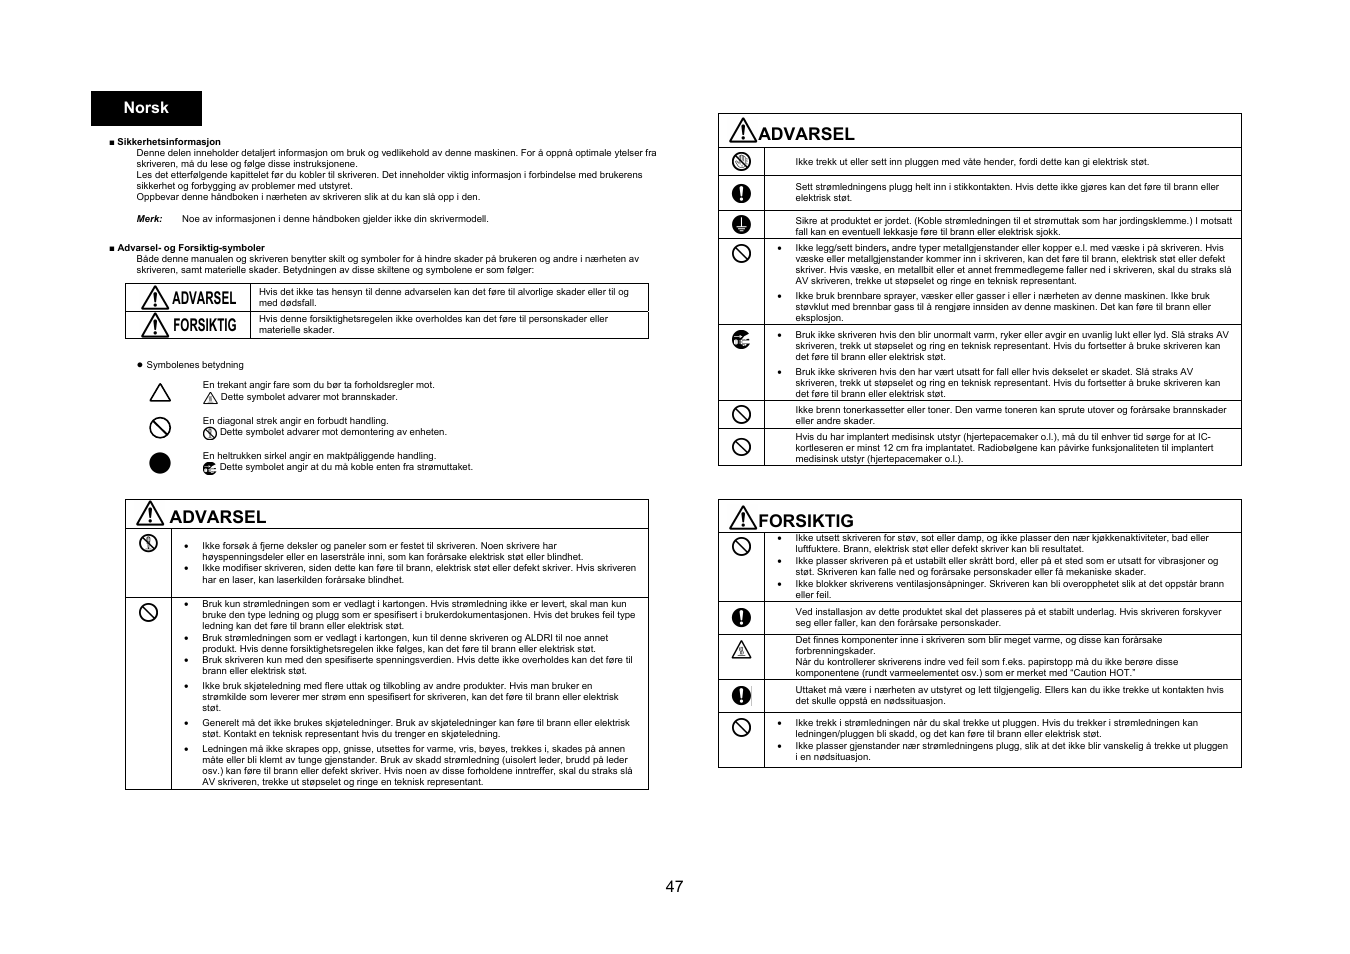 Advarsel, Forsiktig, 47 norsk | Konica Minolta bizhub 4050 User Manual | Page 48 / 67